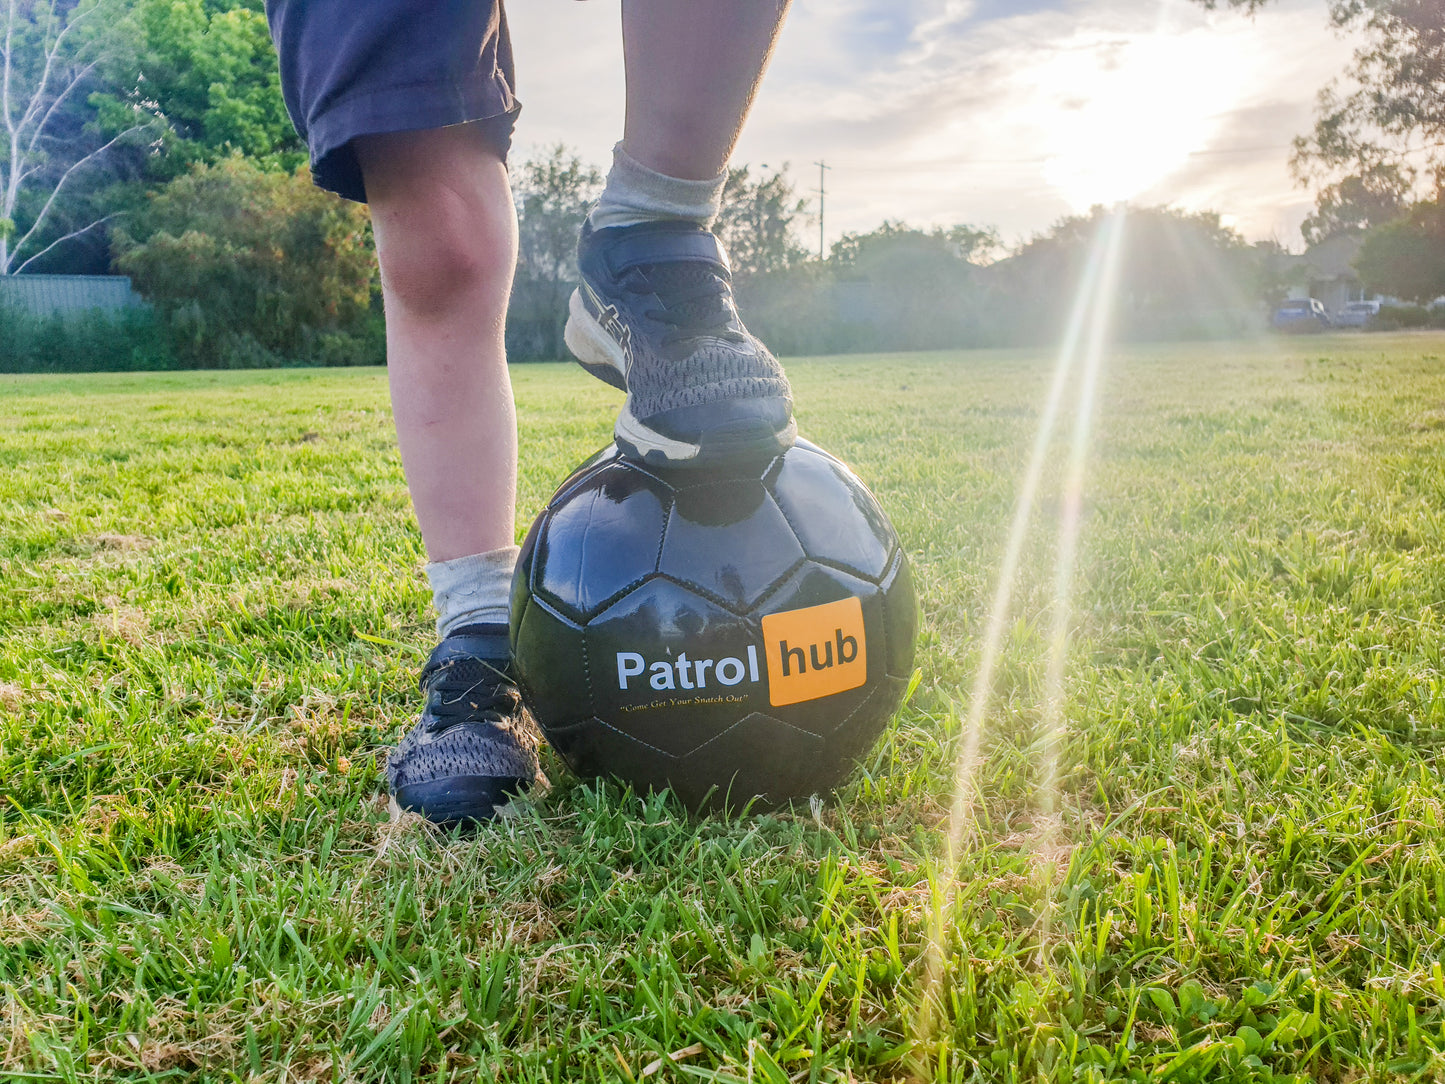 Soccer Ball "Patrol Hub"